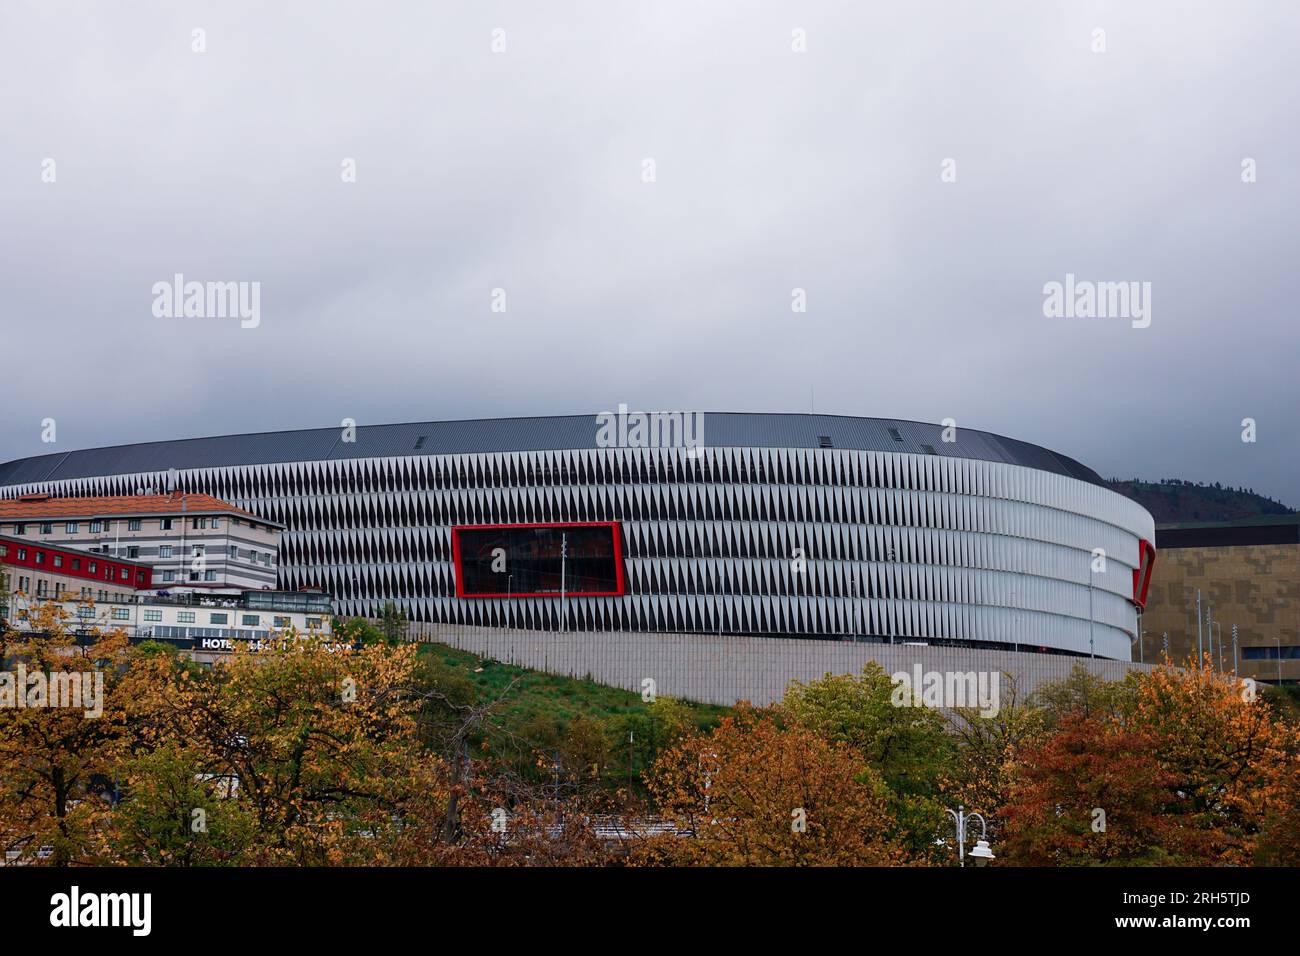 San Mames Fußballstadion. Athletic Club de Bilbao. Bilbao, Baskenland, Spanien. Stockfoto